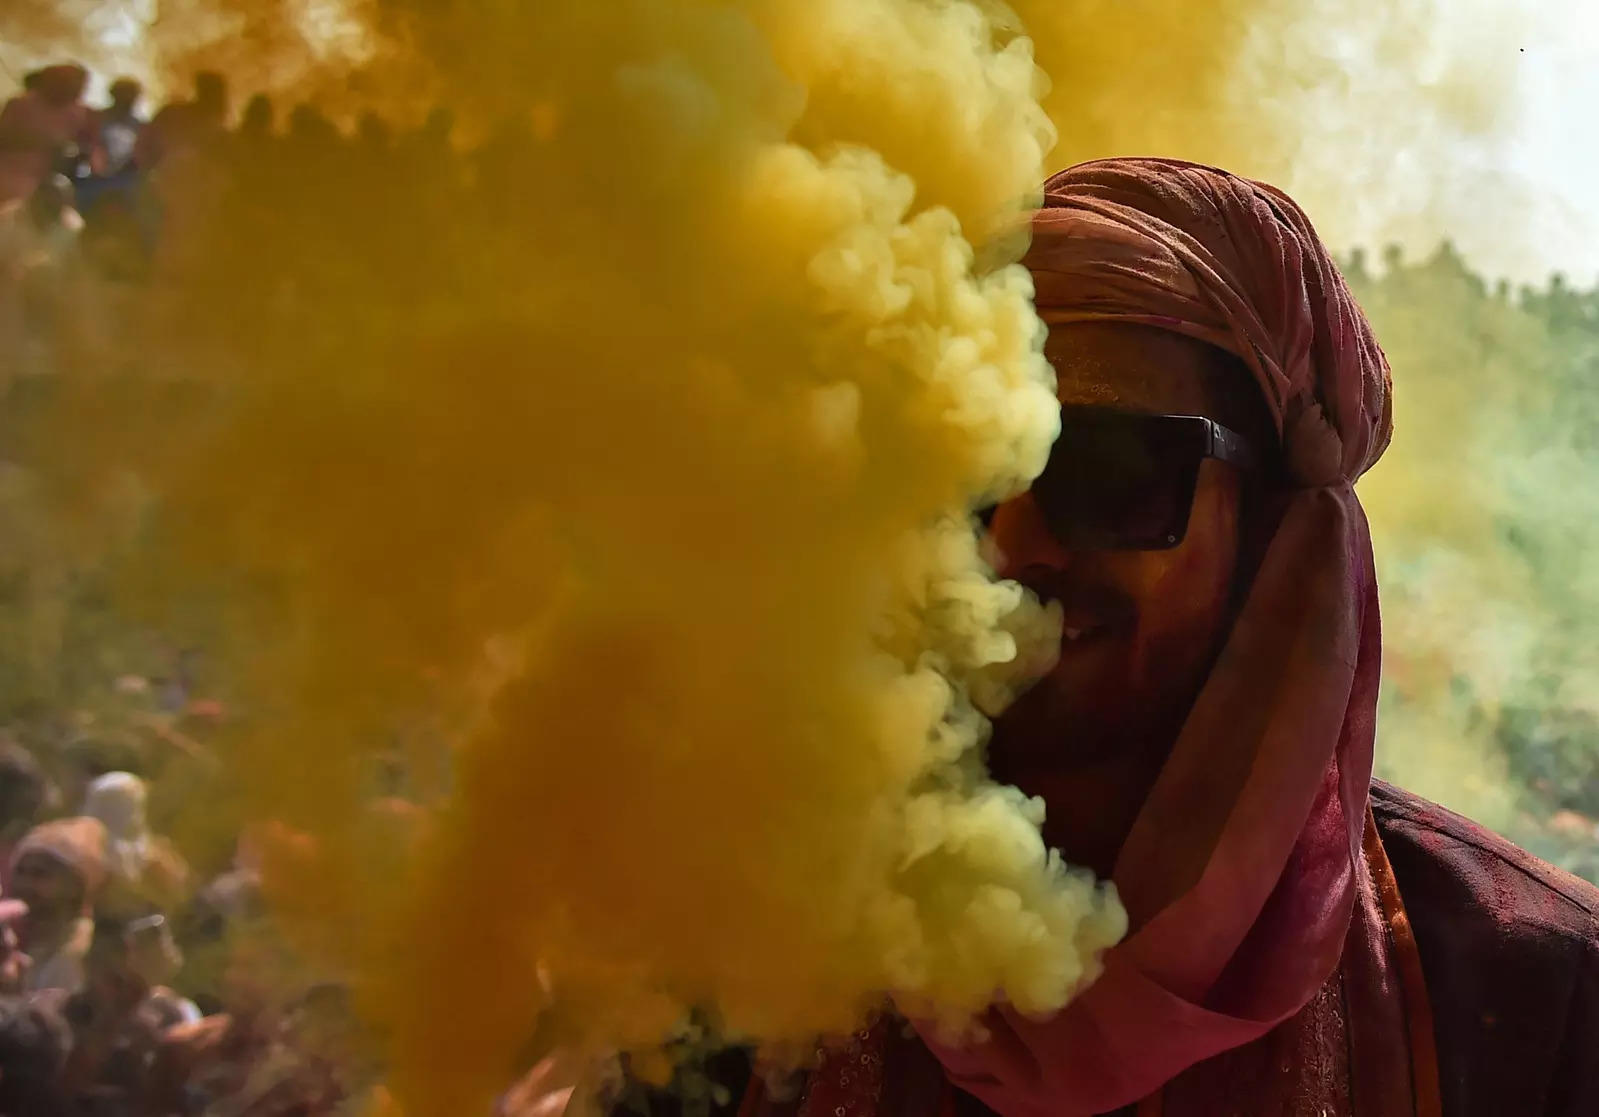 Holi celebrations begin with fervour across India